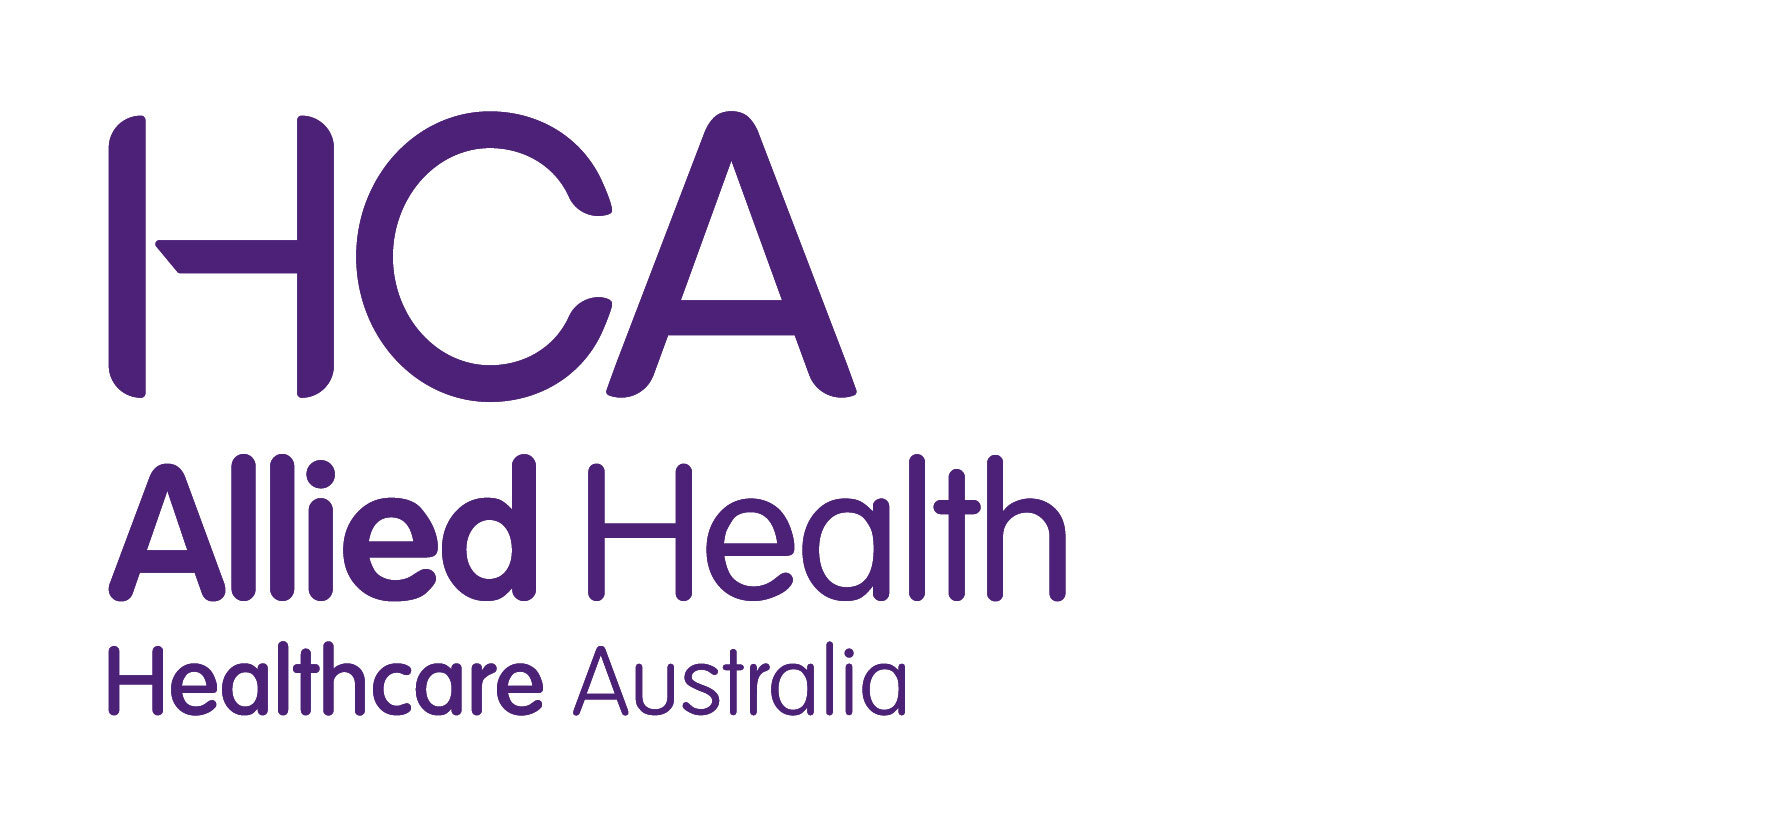 Healthcare Australia (HCA Allied Health) Logo